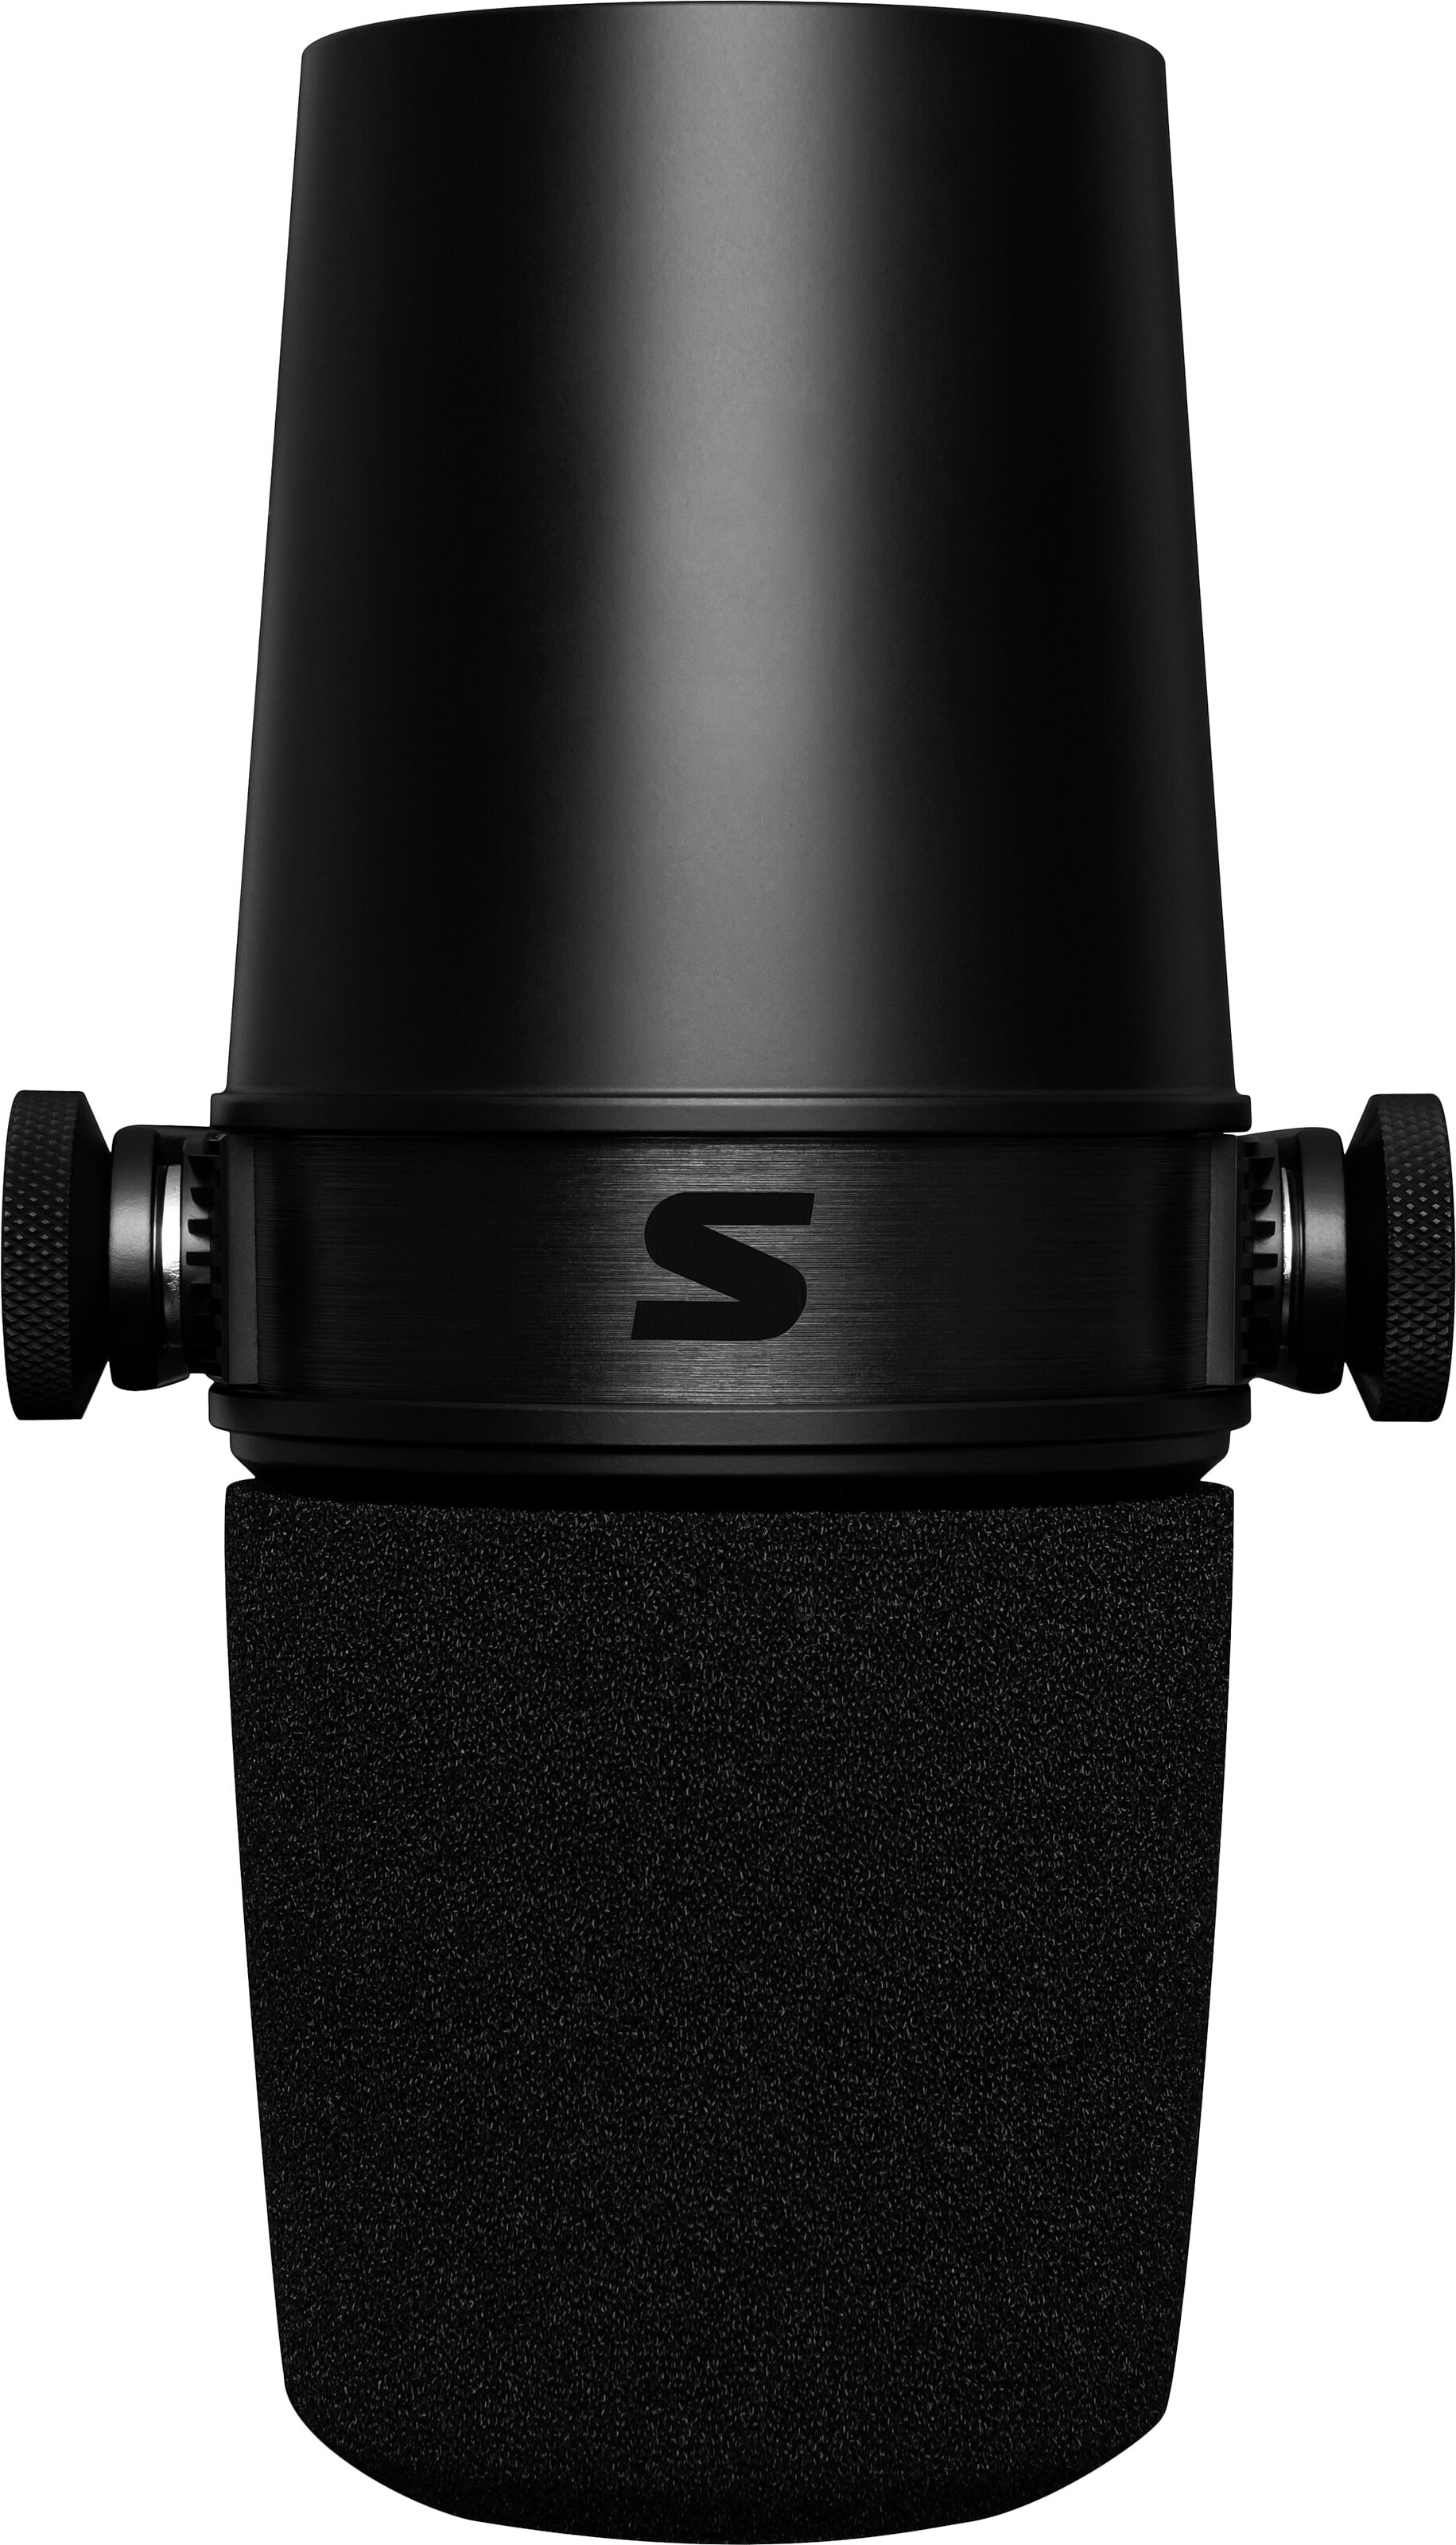 Shure MV7X Cardioid Dynamic Podcast Microphone